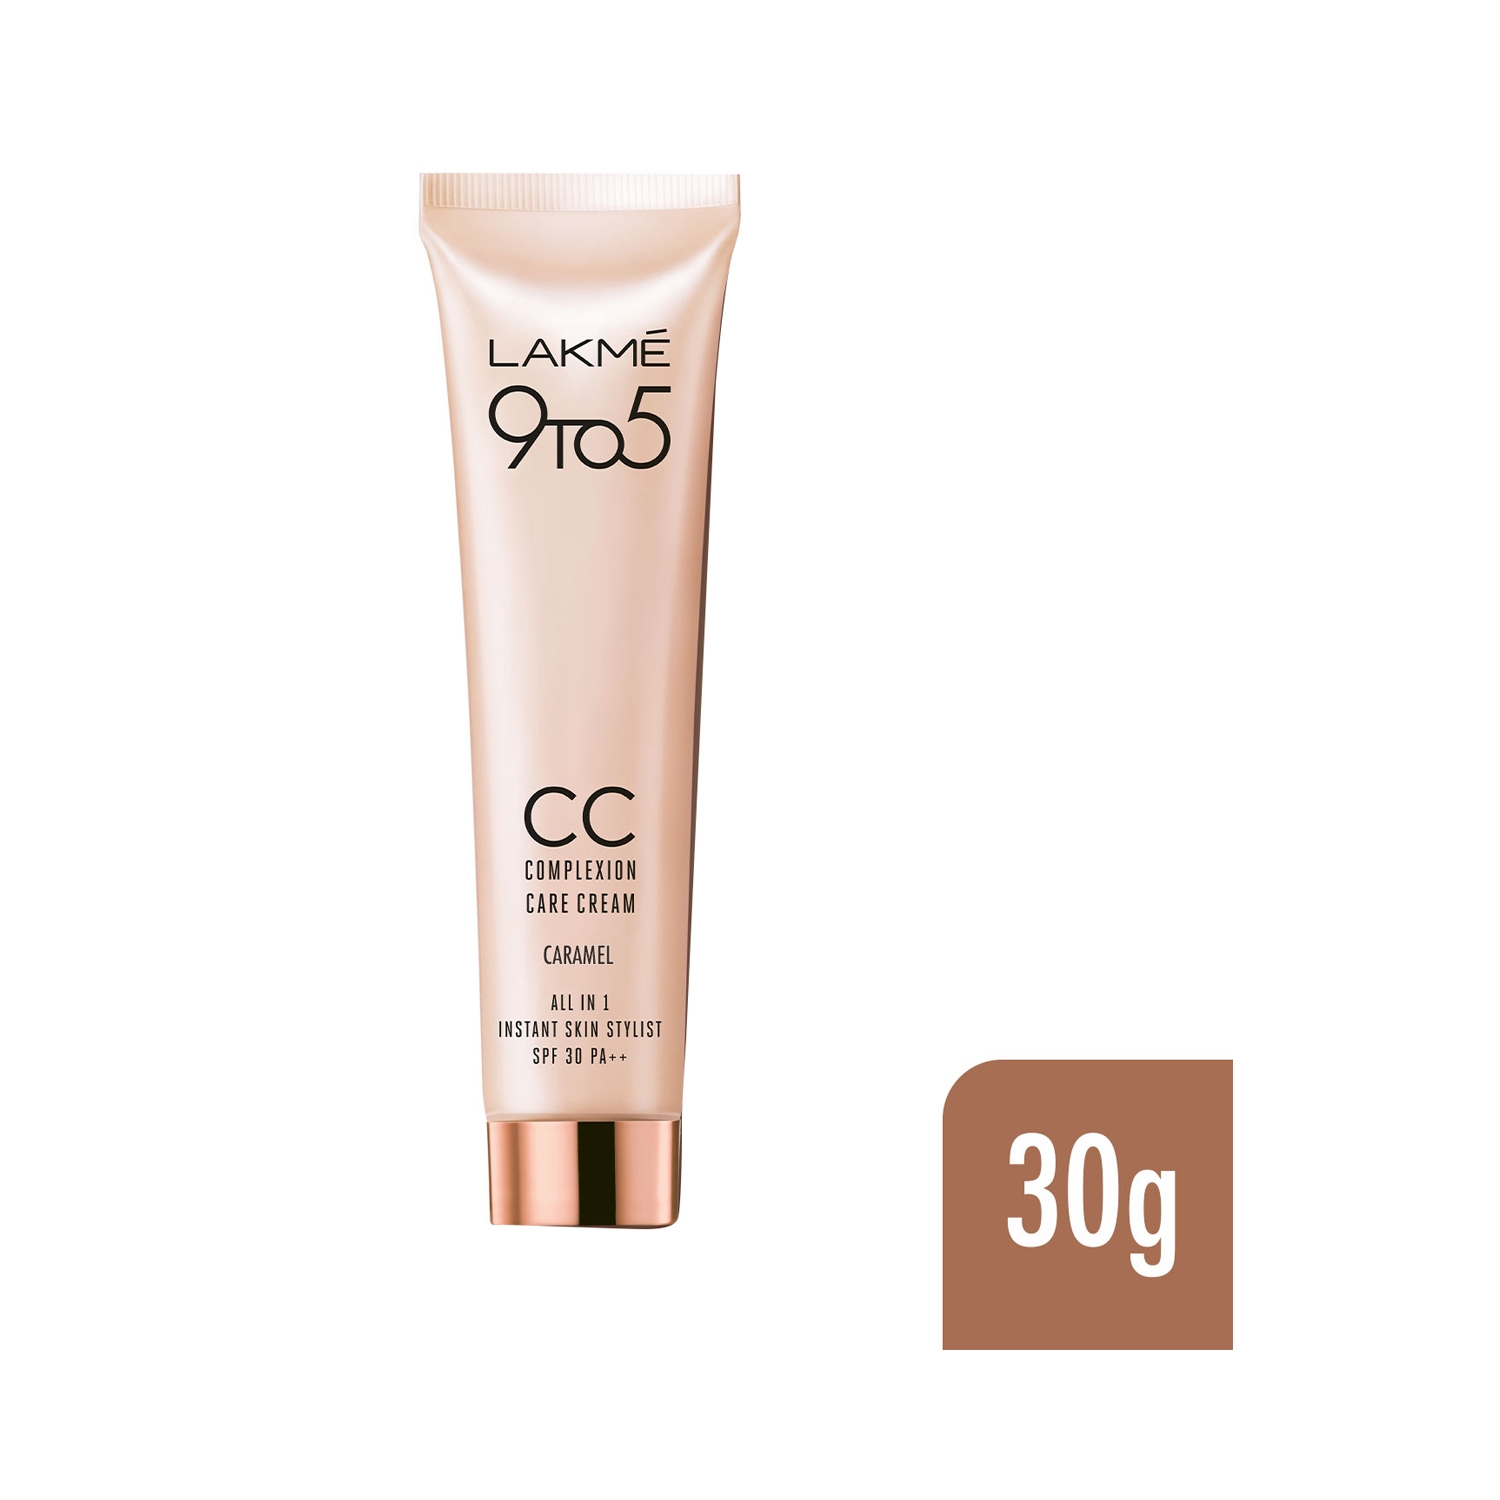 Lakme | Lakme Cc Complexion Care Cream SPF 30 - Caramel (30g)